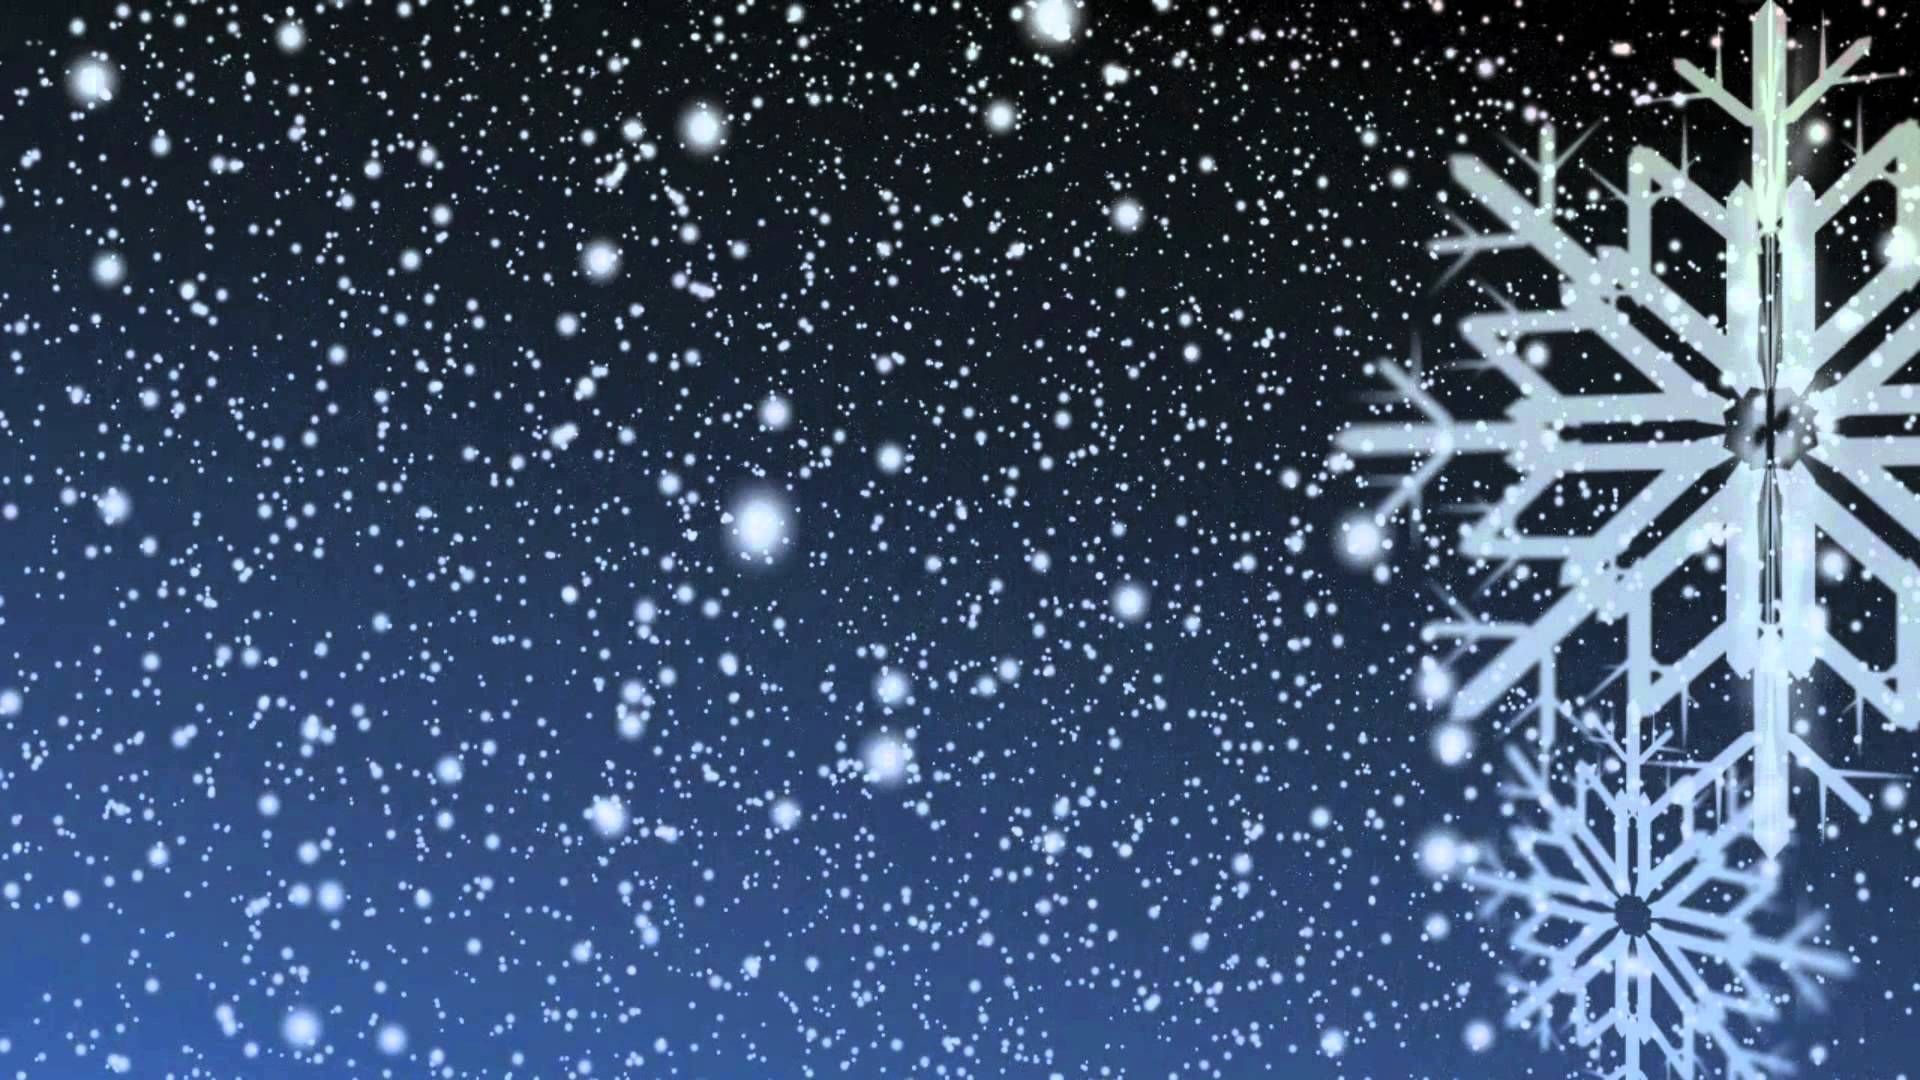 falling snow at night wallpaper